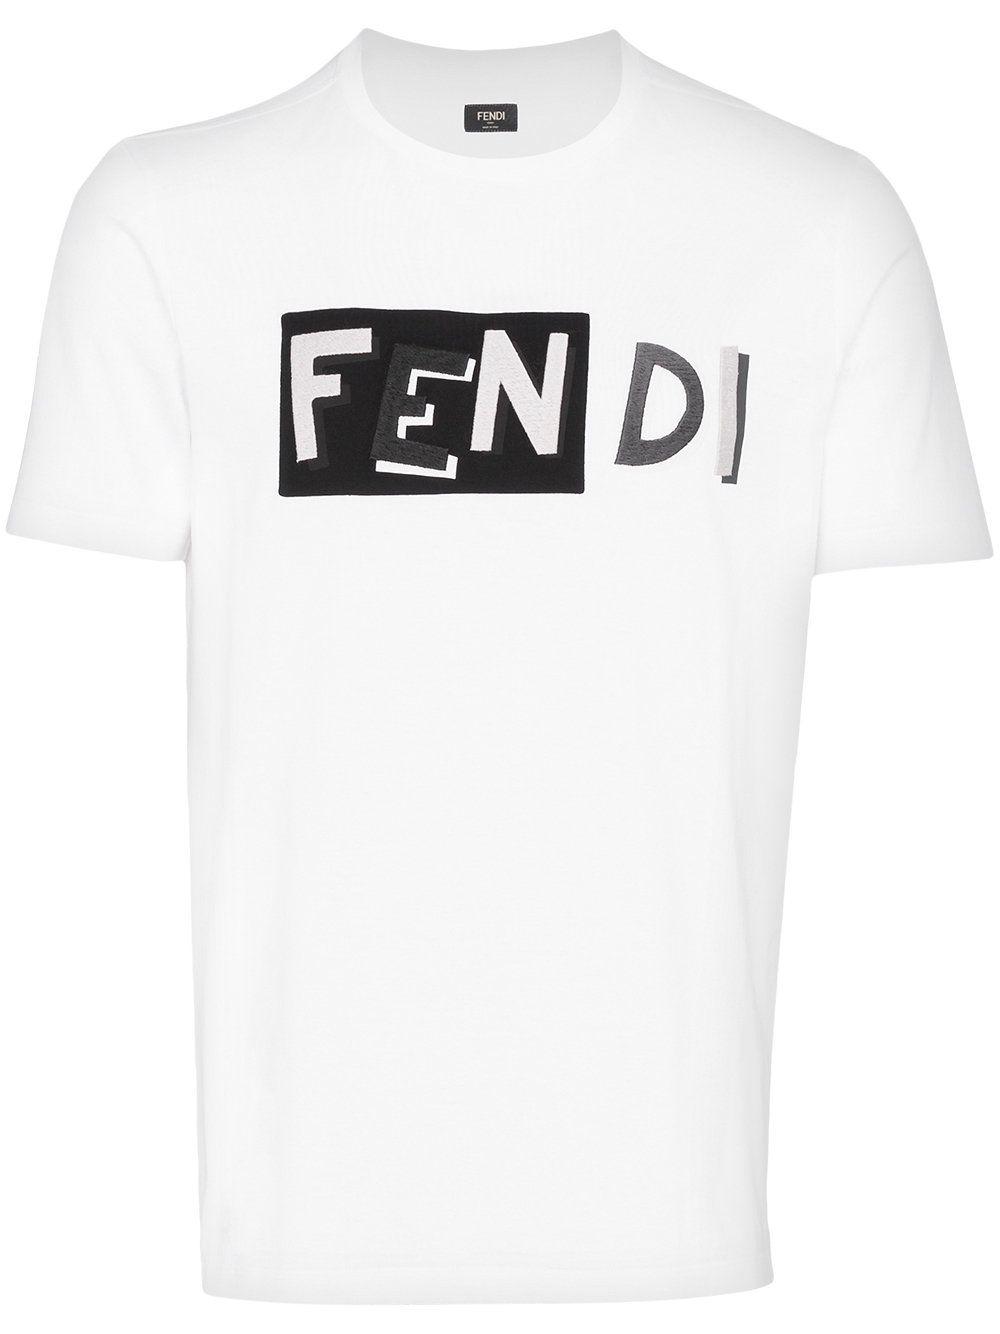 White Letter Logo - Fendi Roundneck t shirt with white letter logo front | style board ...